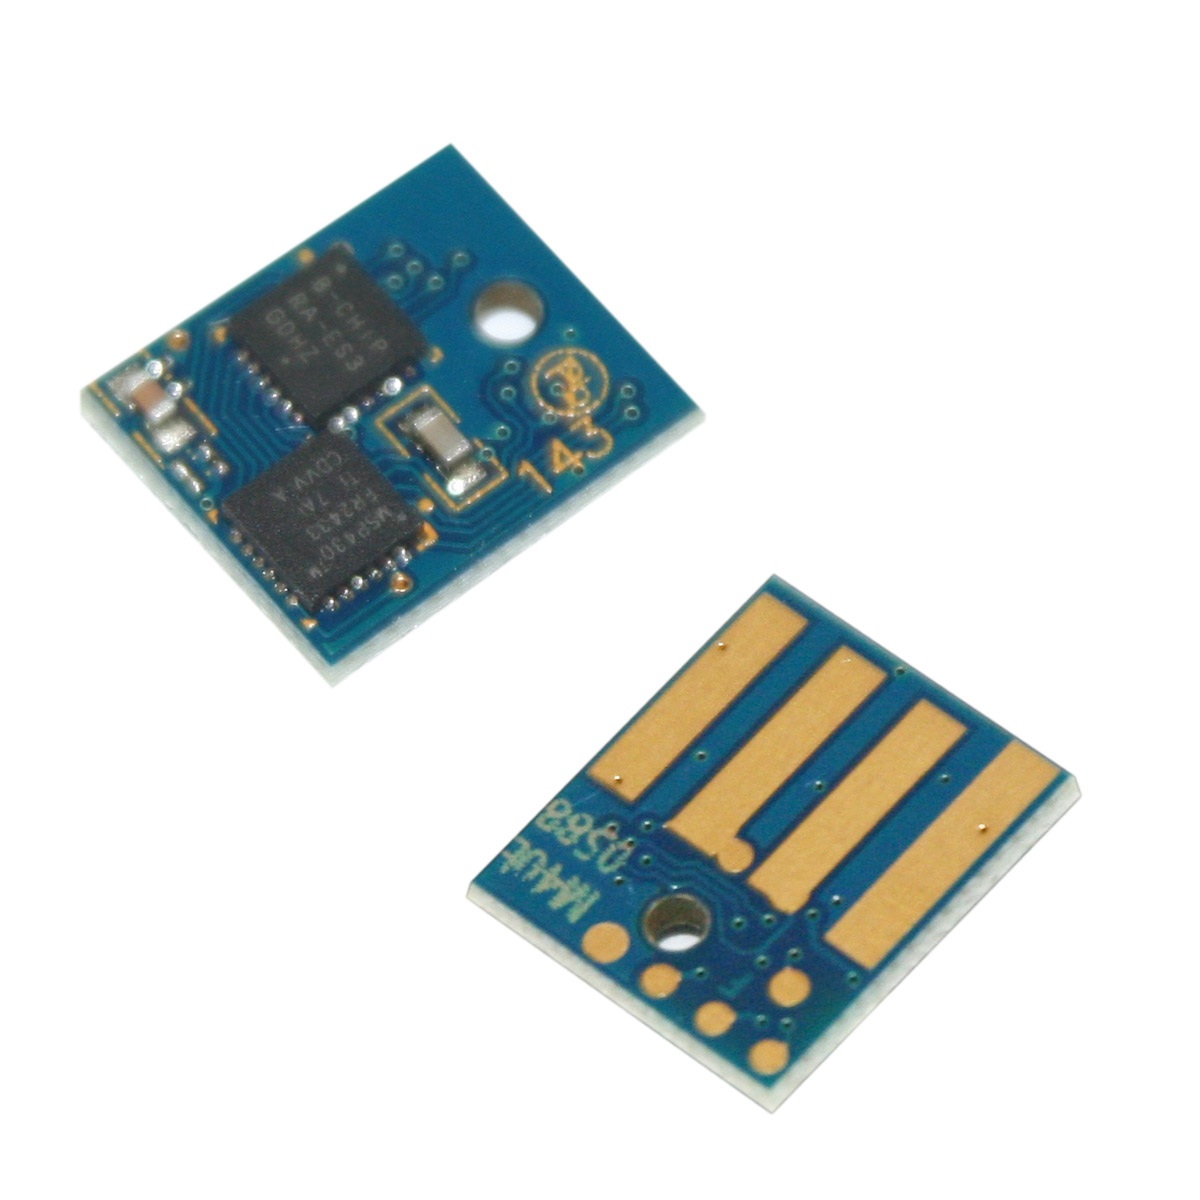 Counter chip Chip zliczający Konica Minolta bizhub 4000P